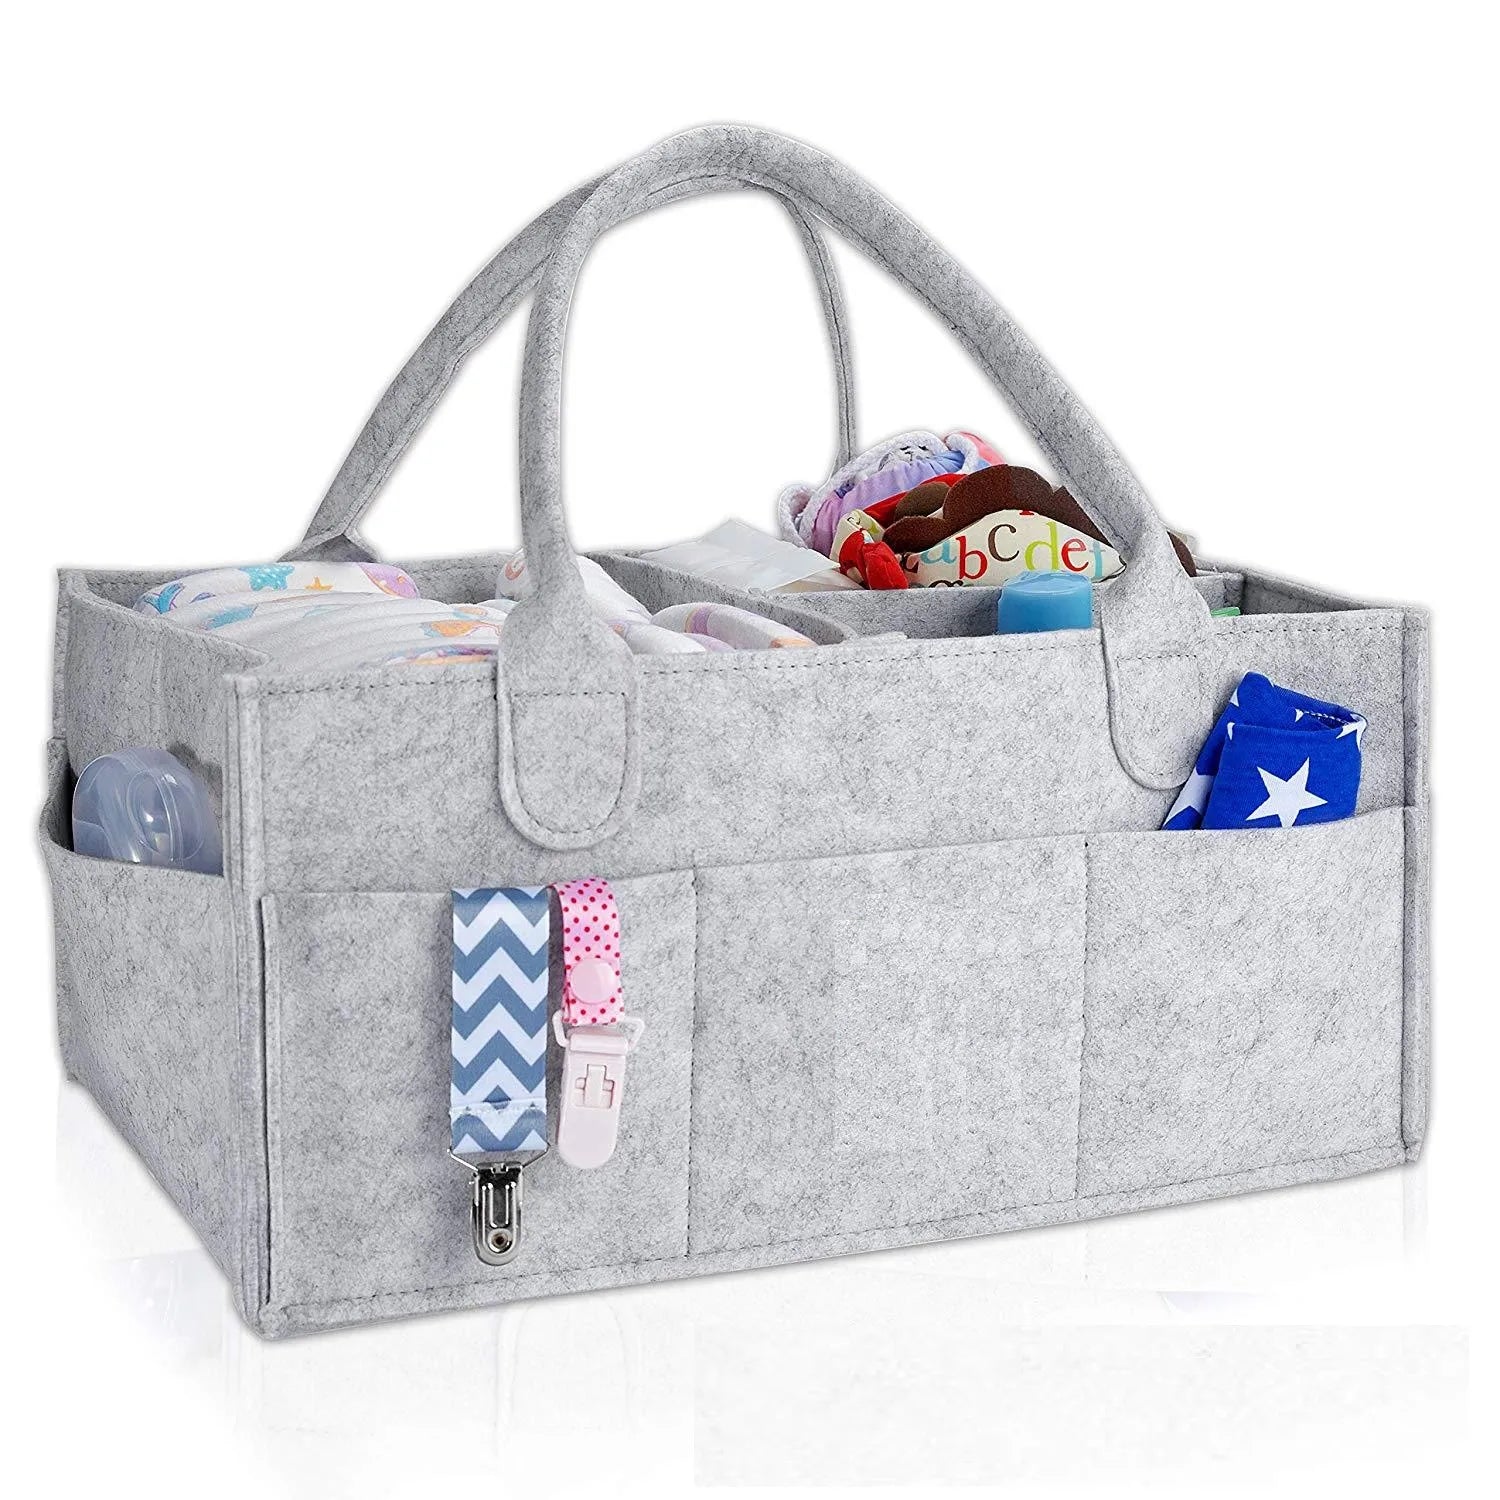 Infant Diaper Storage Caddy for Nursery - craftmasterslate